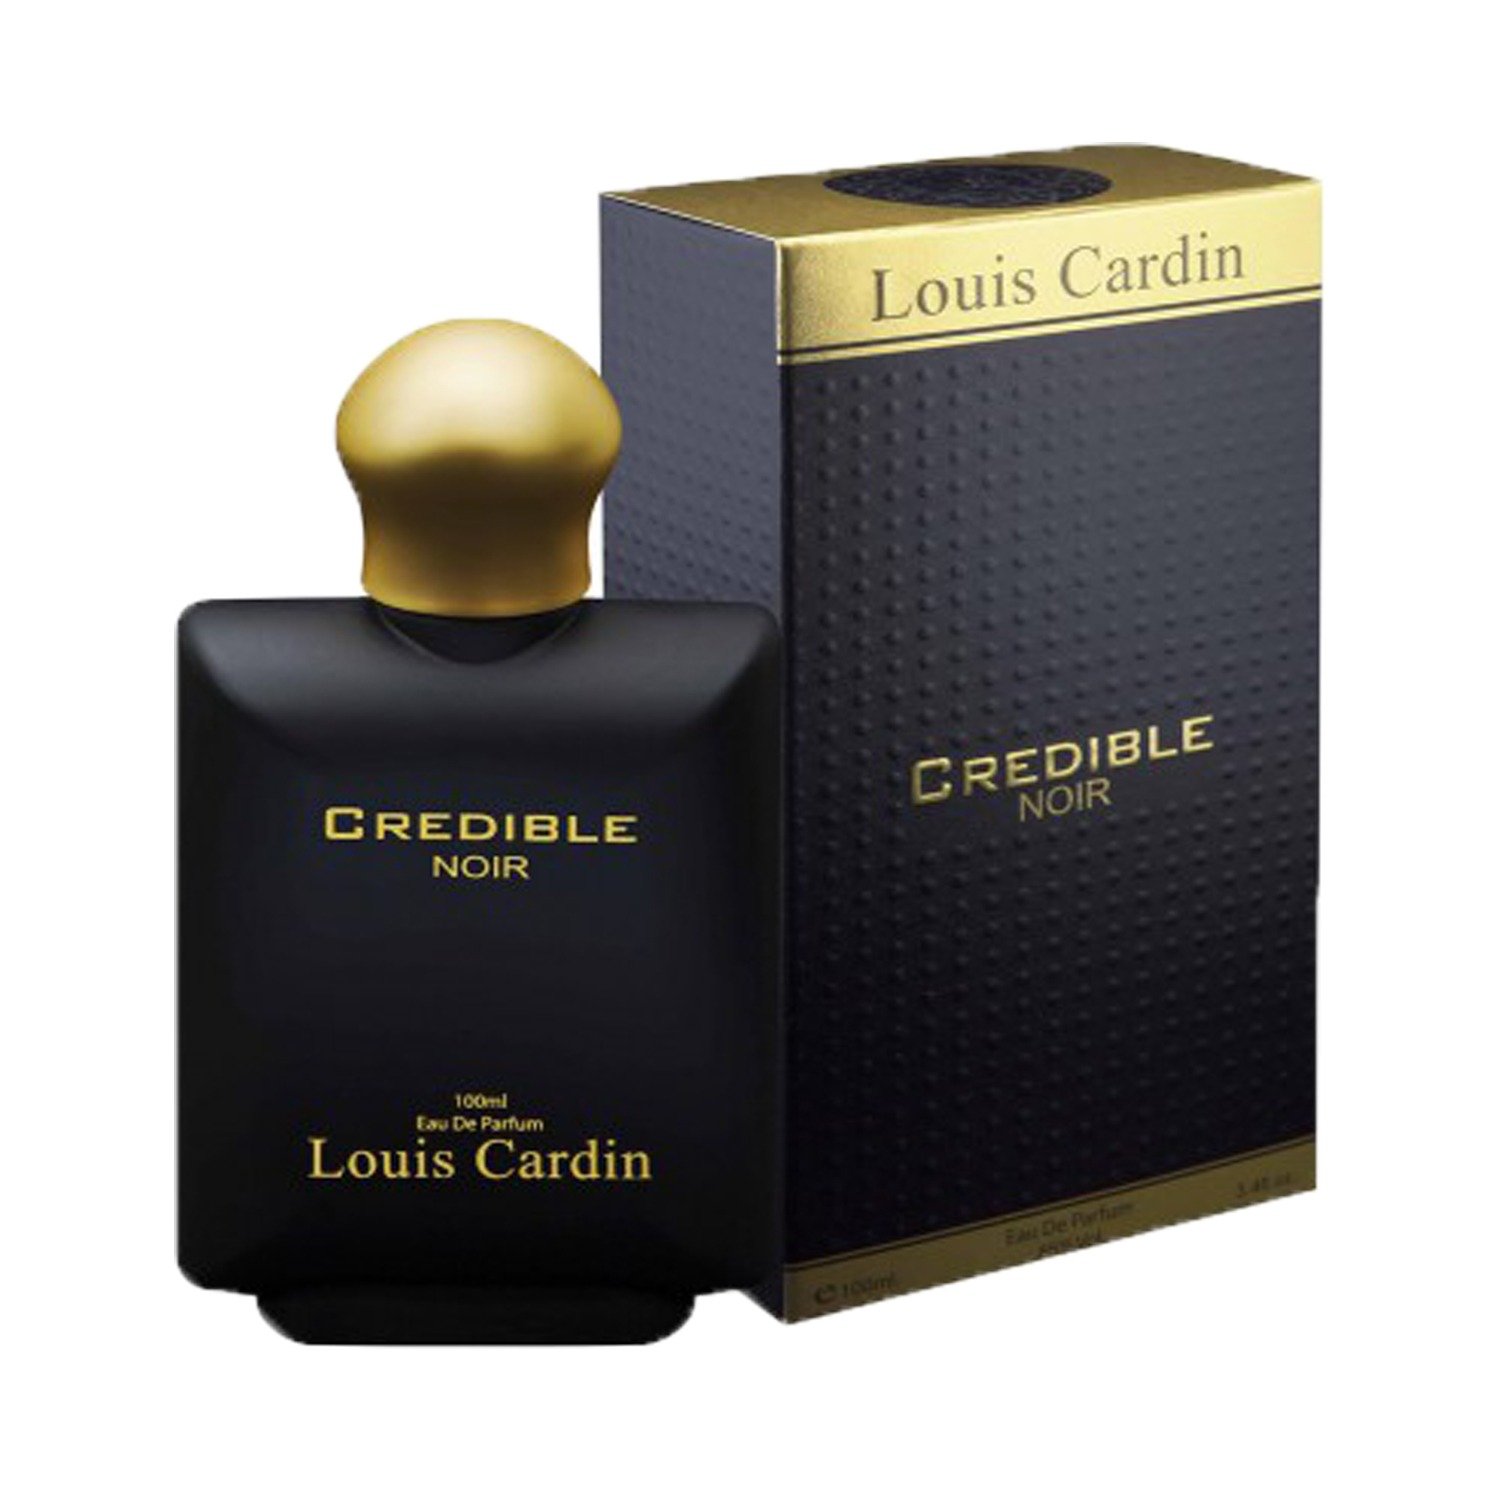  Louis Cardin Credible - Noir EDP For Men 100ml